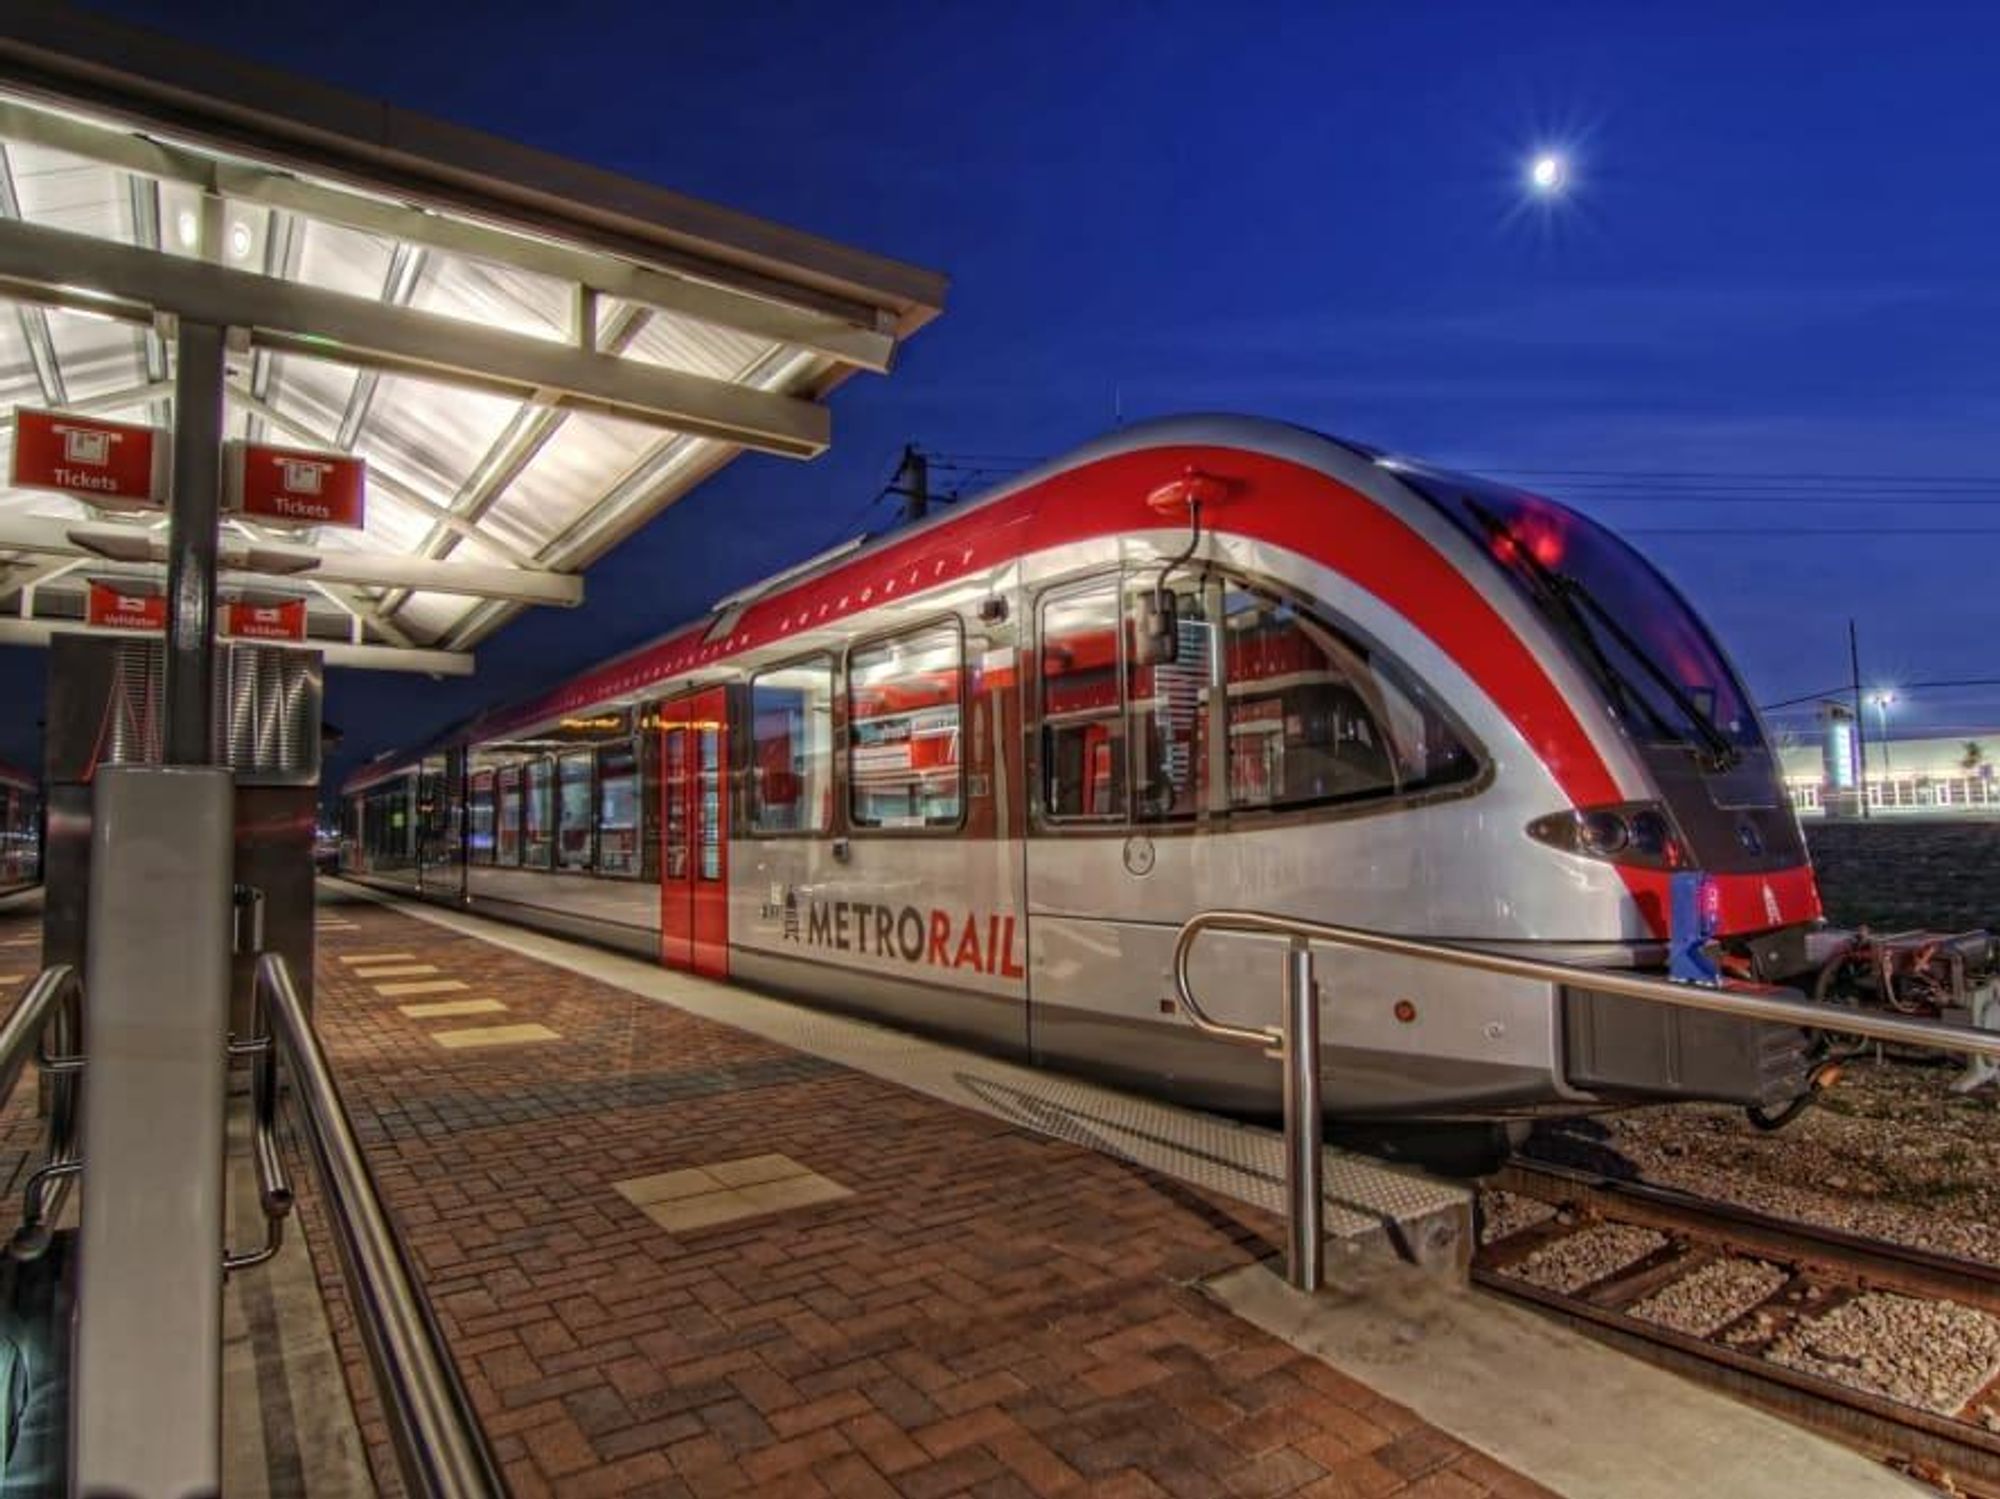 Austin MetroRail light rail train